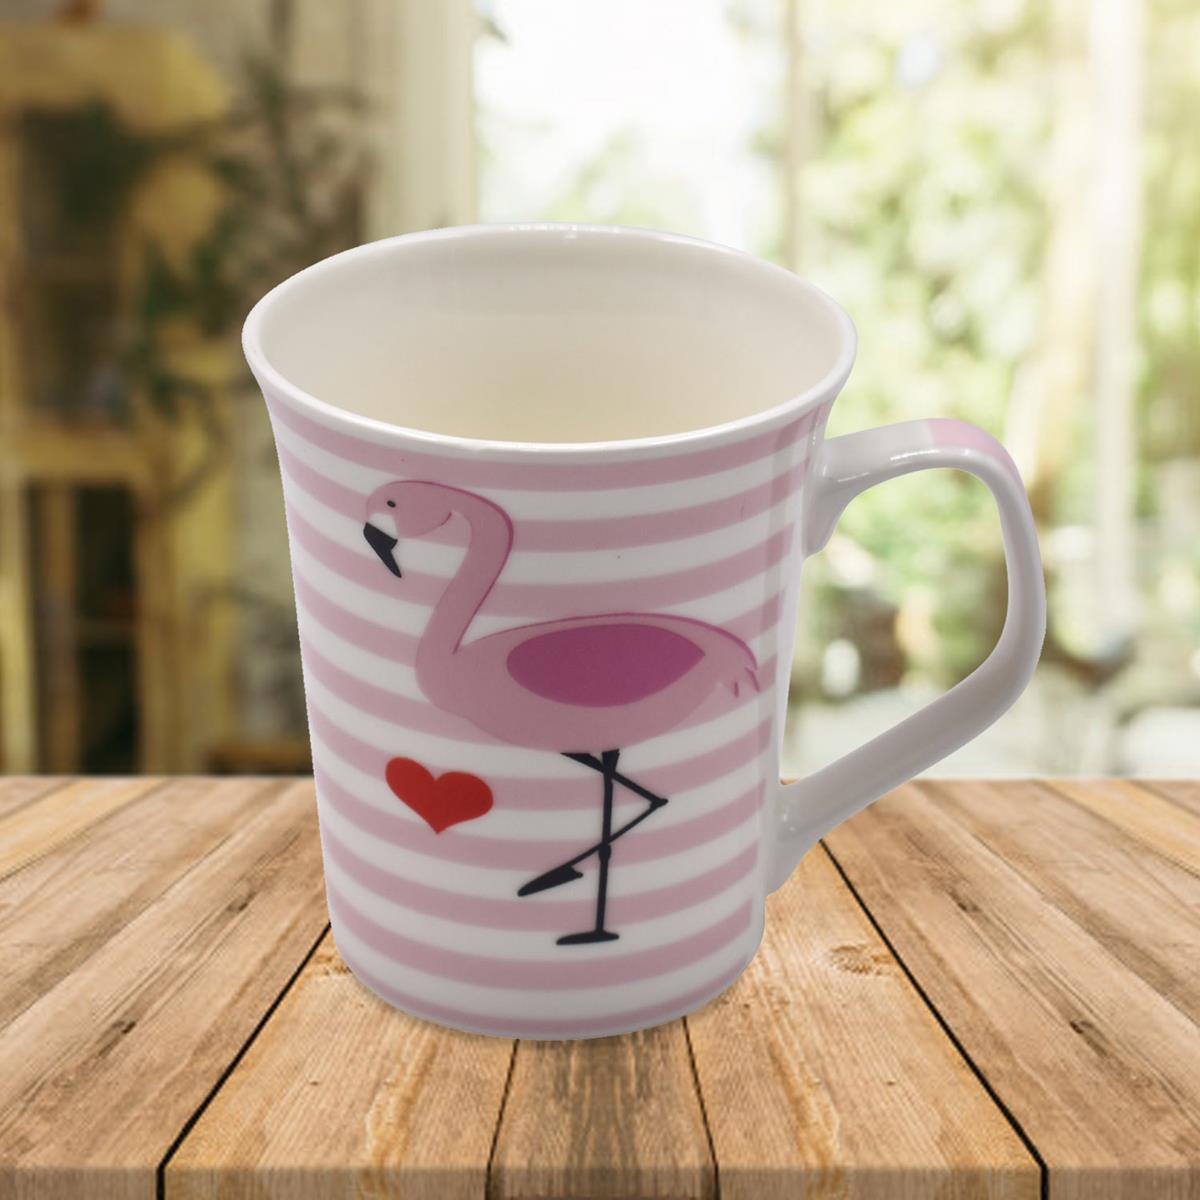 Printed Ceramic Tall Coffee or Tea Mug with handle - 325ml (4611-C-B)